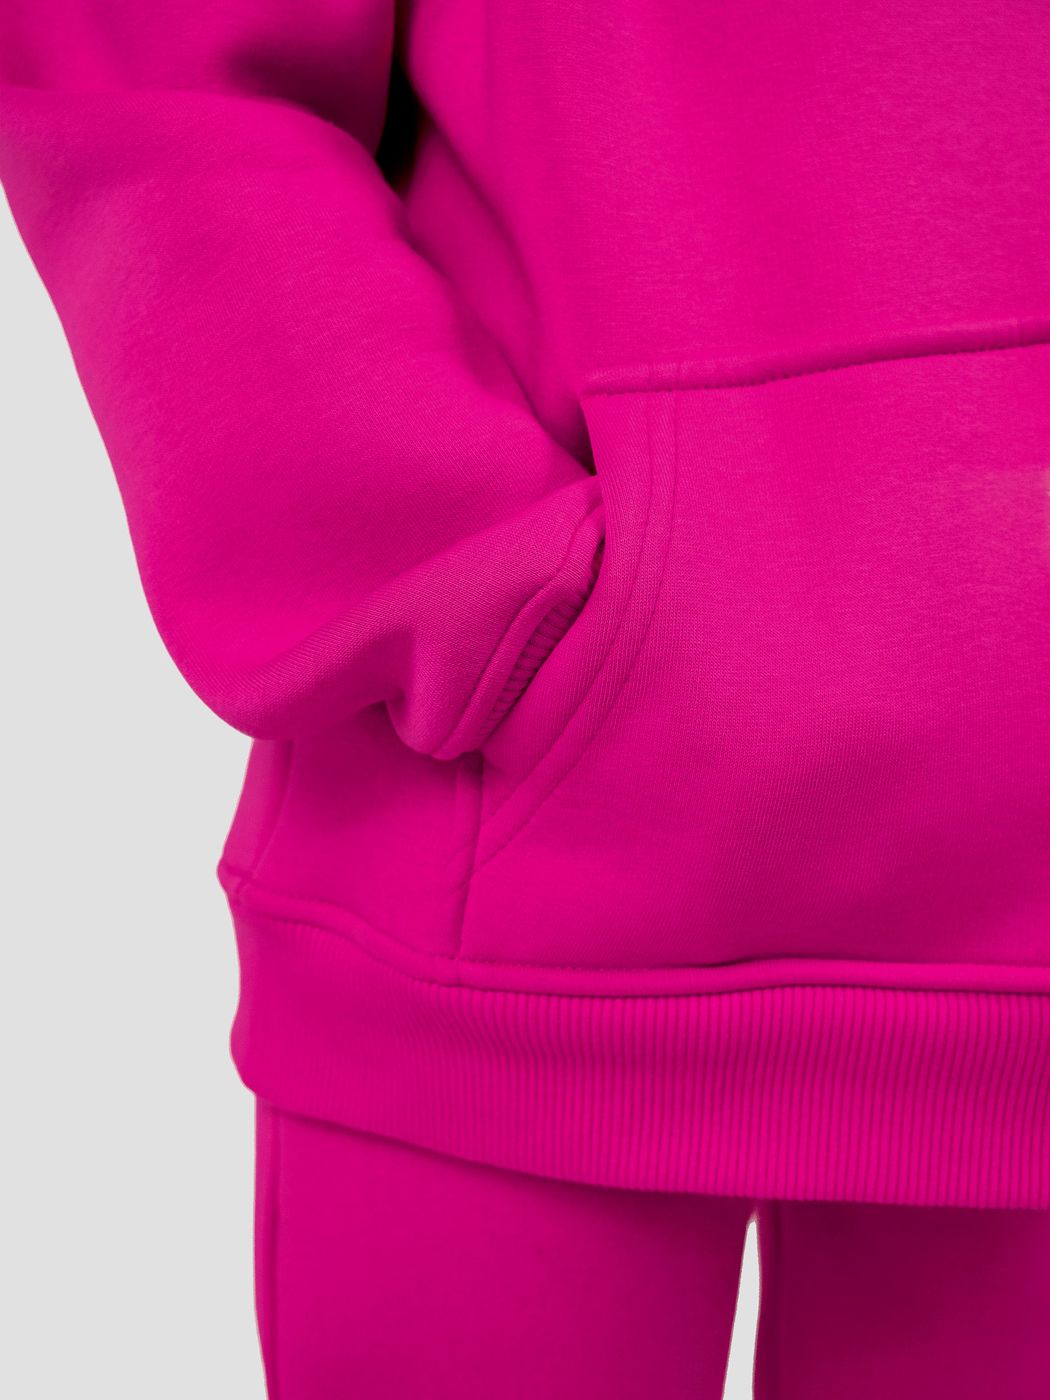 Kid's suit hoodie and pants pink, малиновий, 3XS (86-92 cm), 92